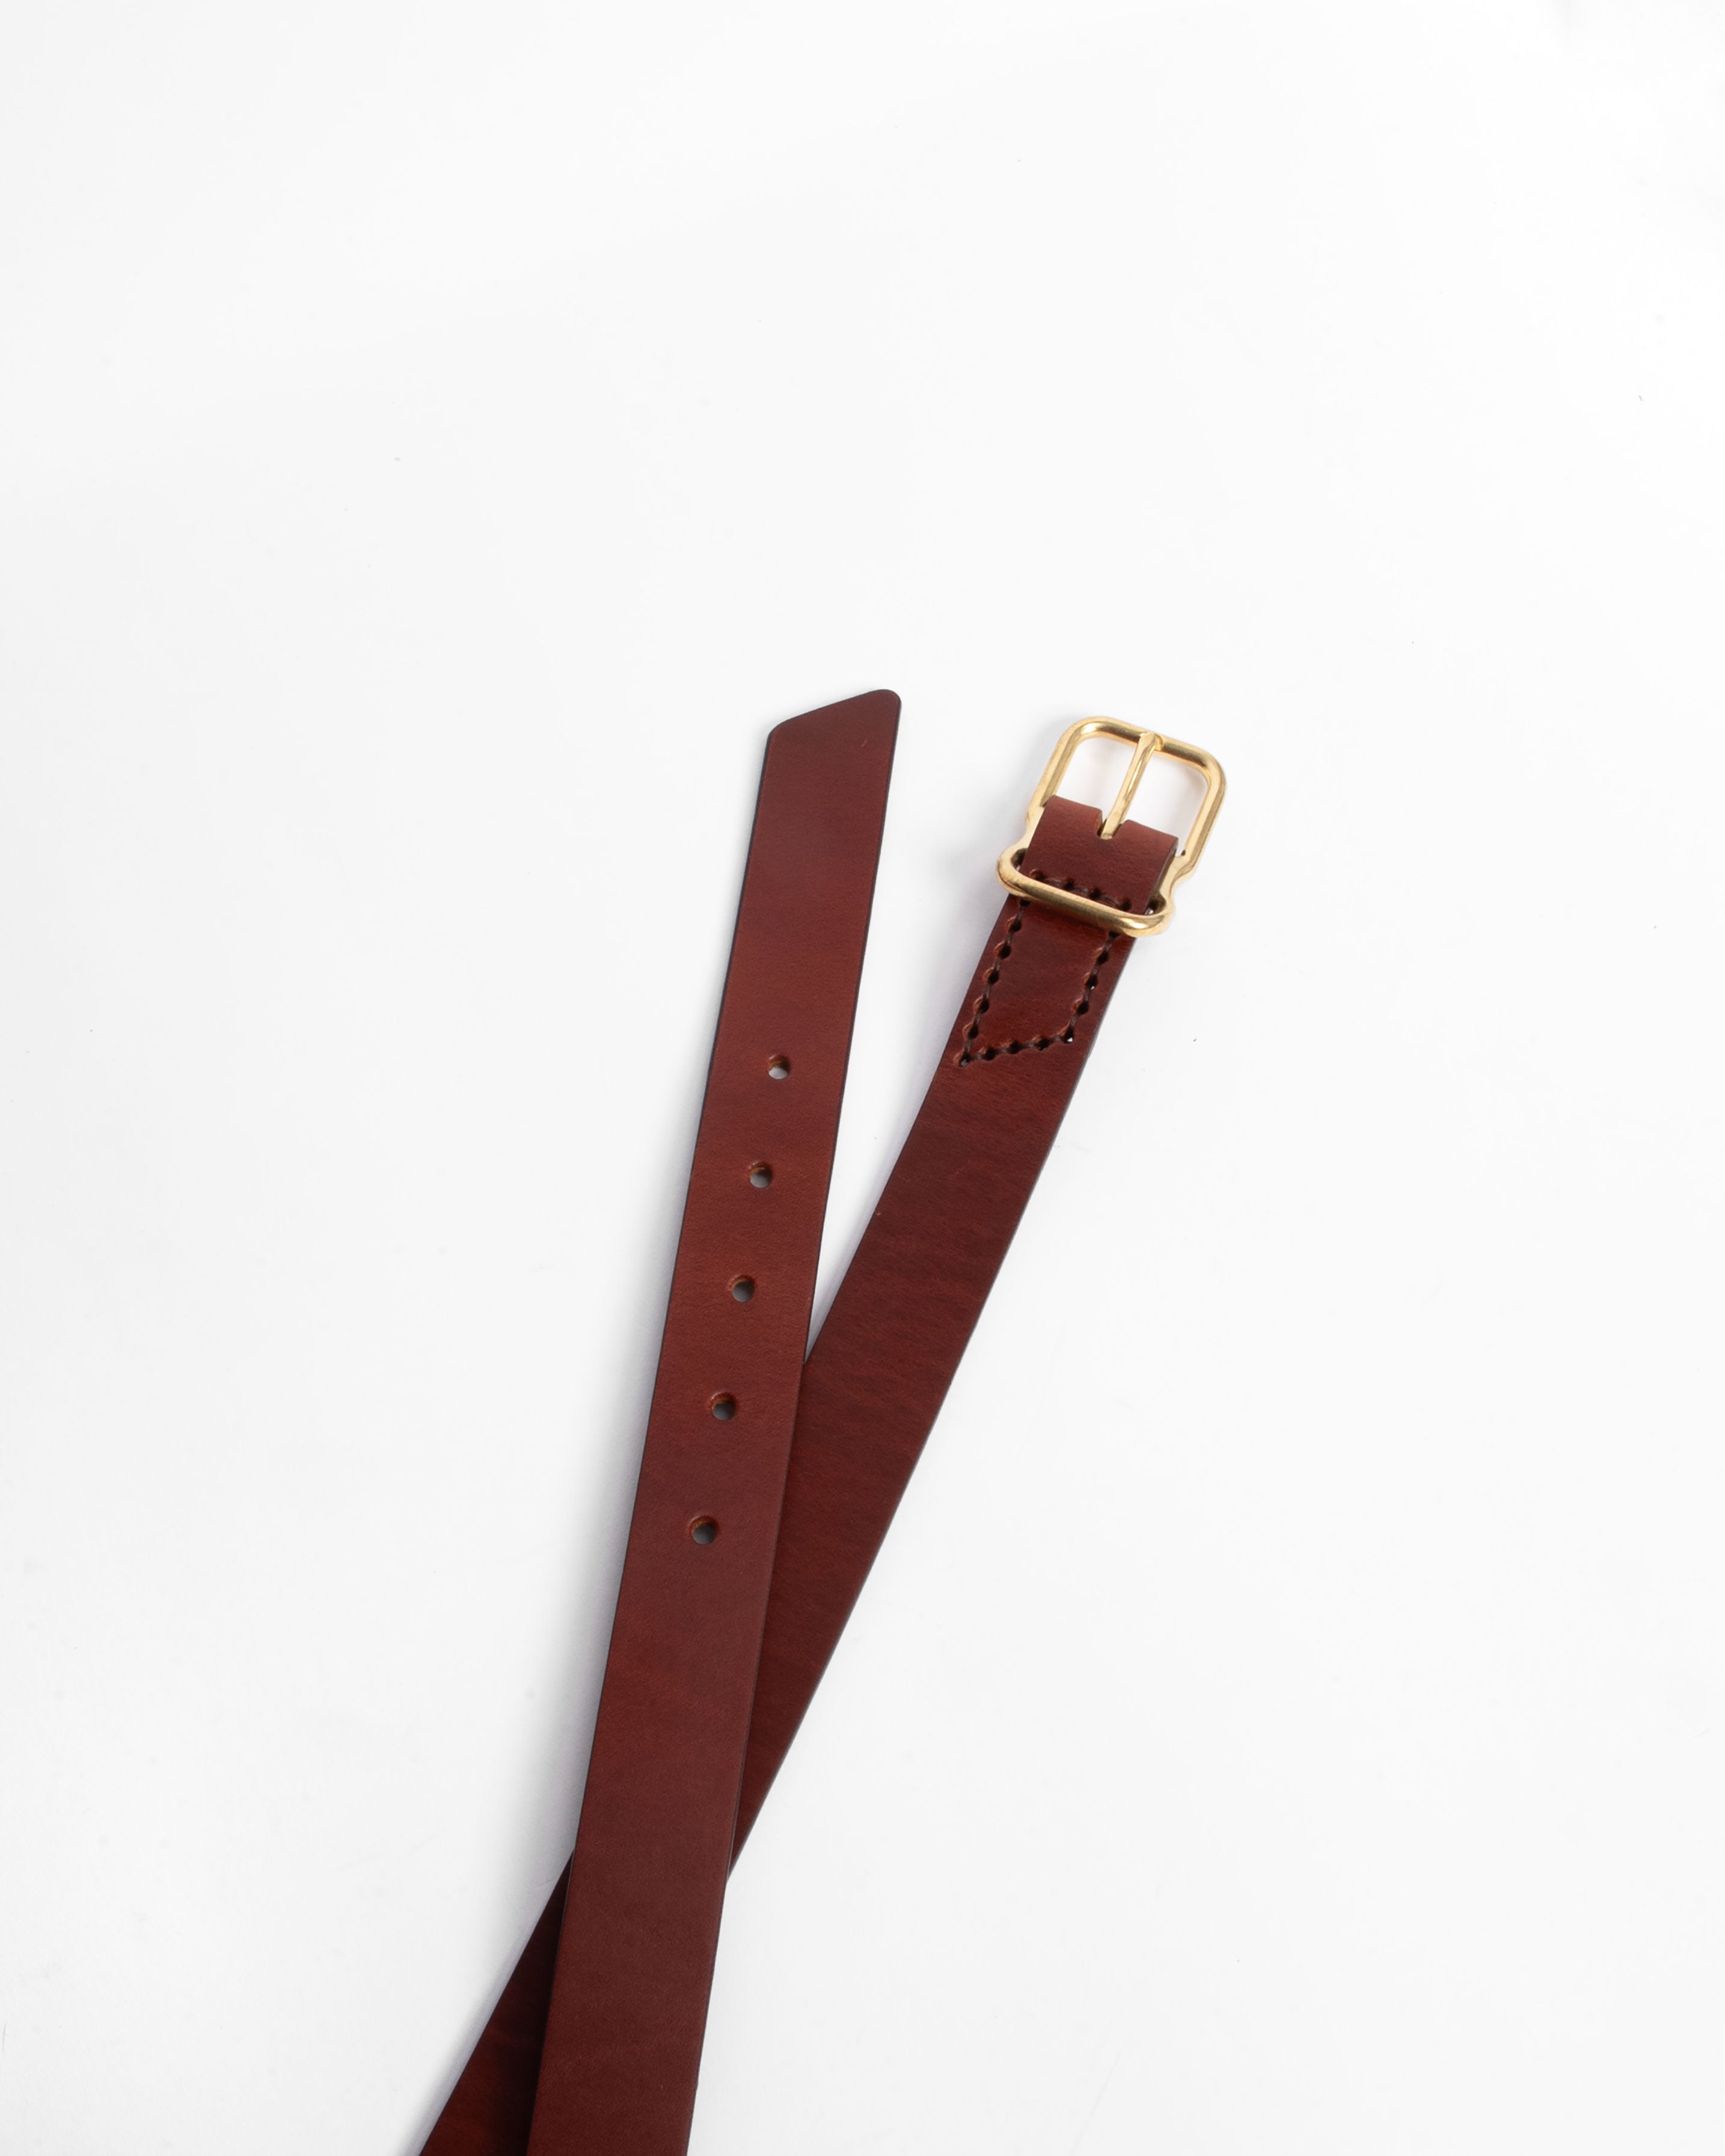 118 Signature Leather Belt - Narrow - Chestnut - Brass